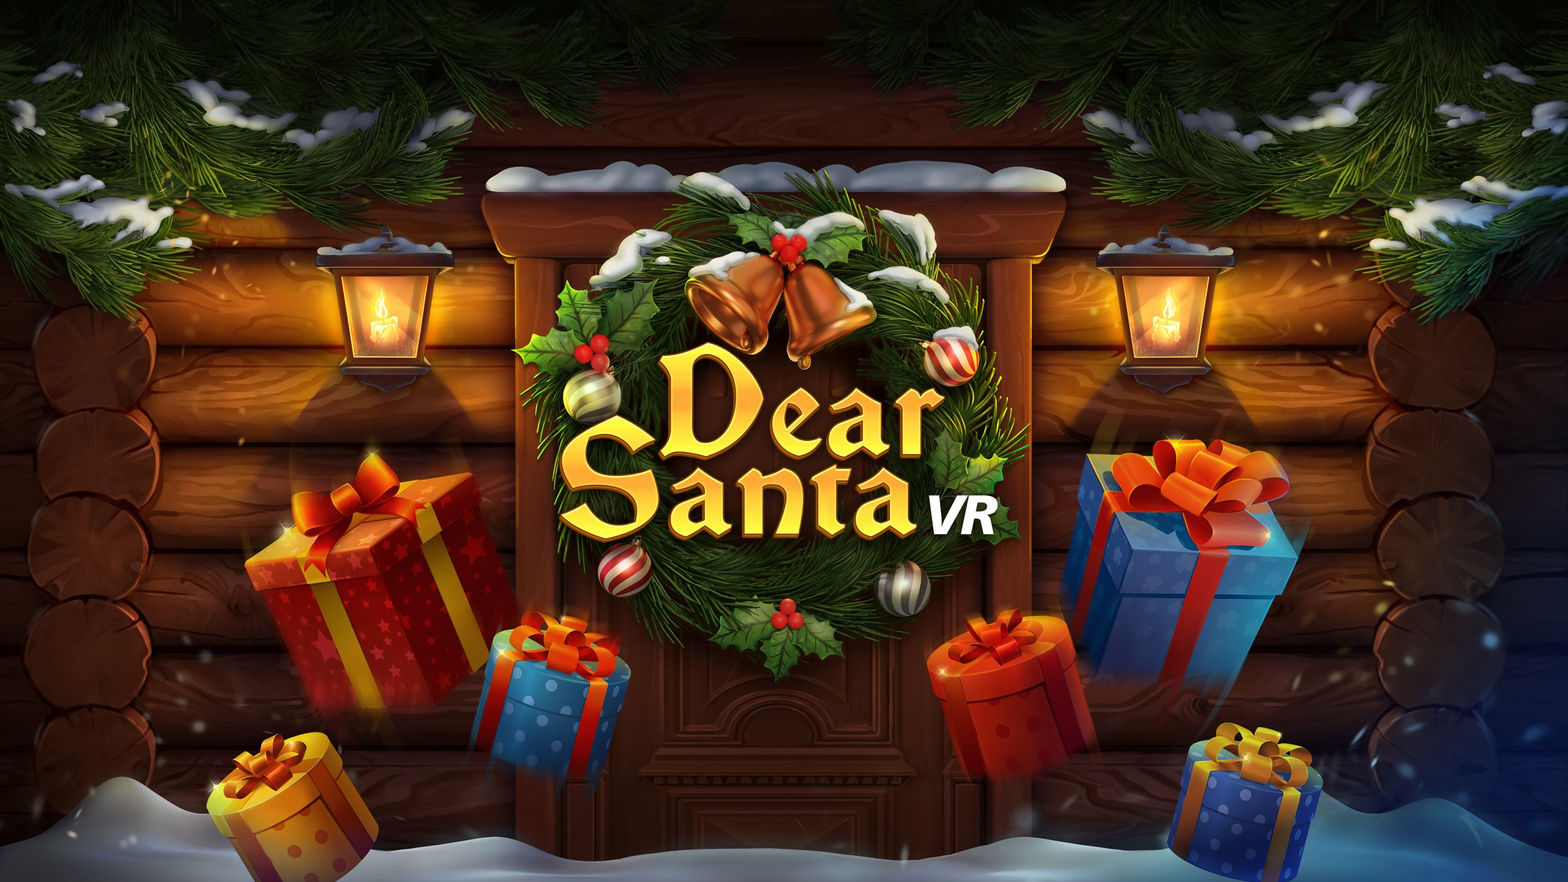 Dear Santa VR